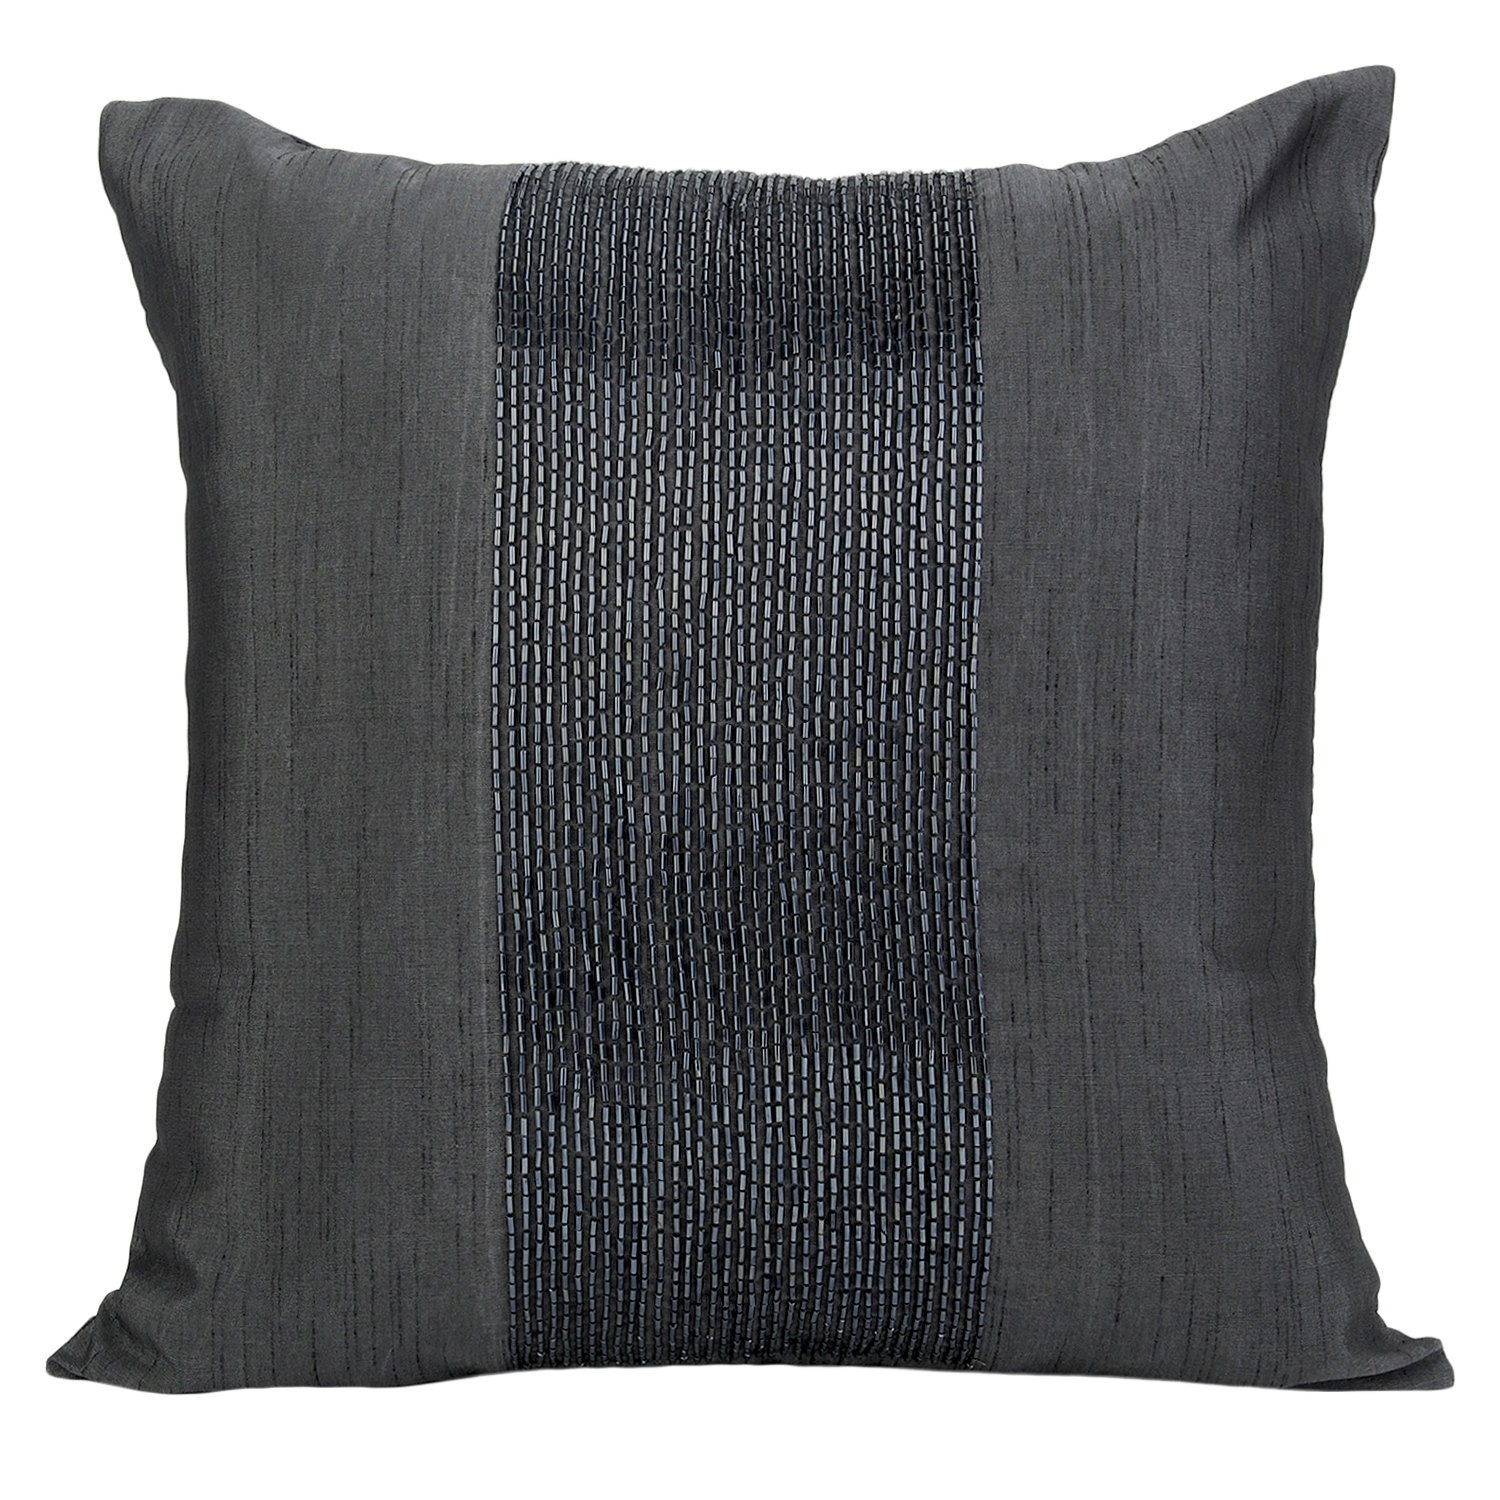 Charcoal Grey Pillow Cover Decorative Pillows Beaded Pillow